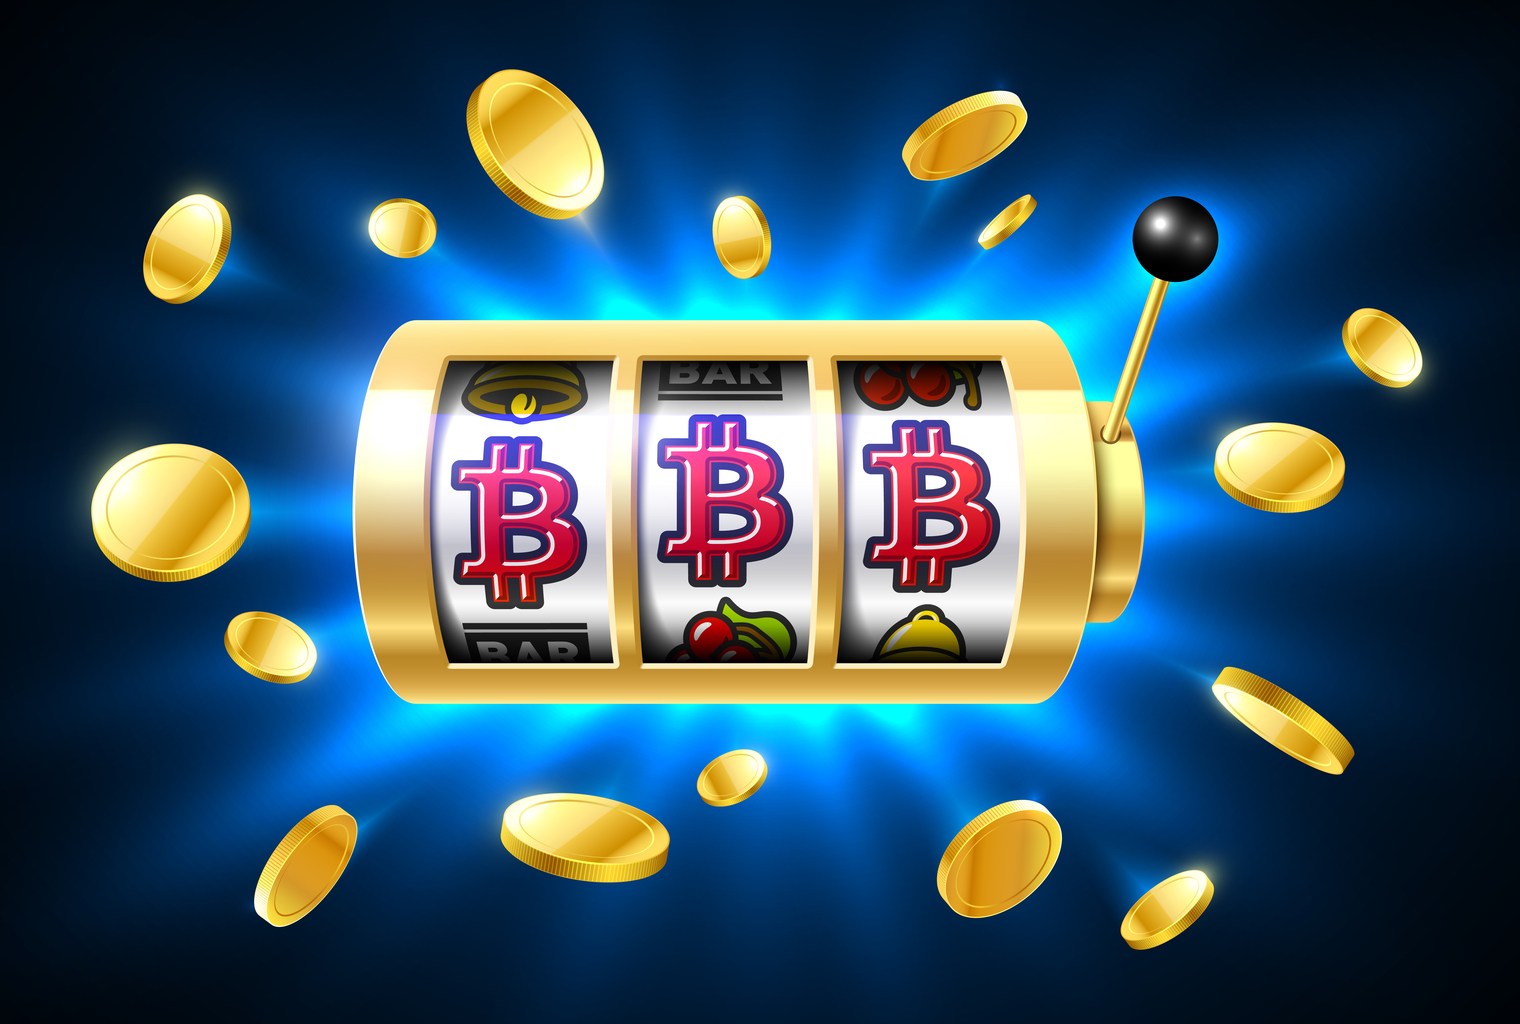 Jokaroom bitcoin casino free spins